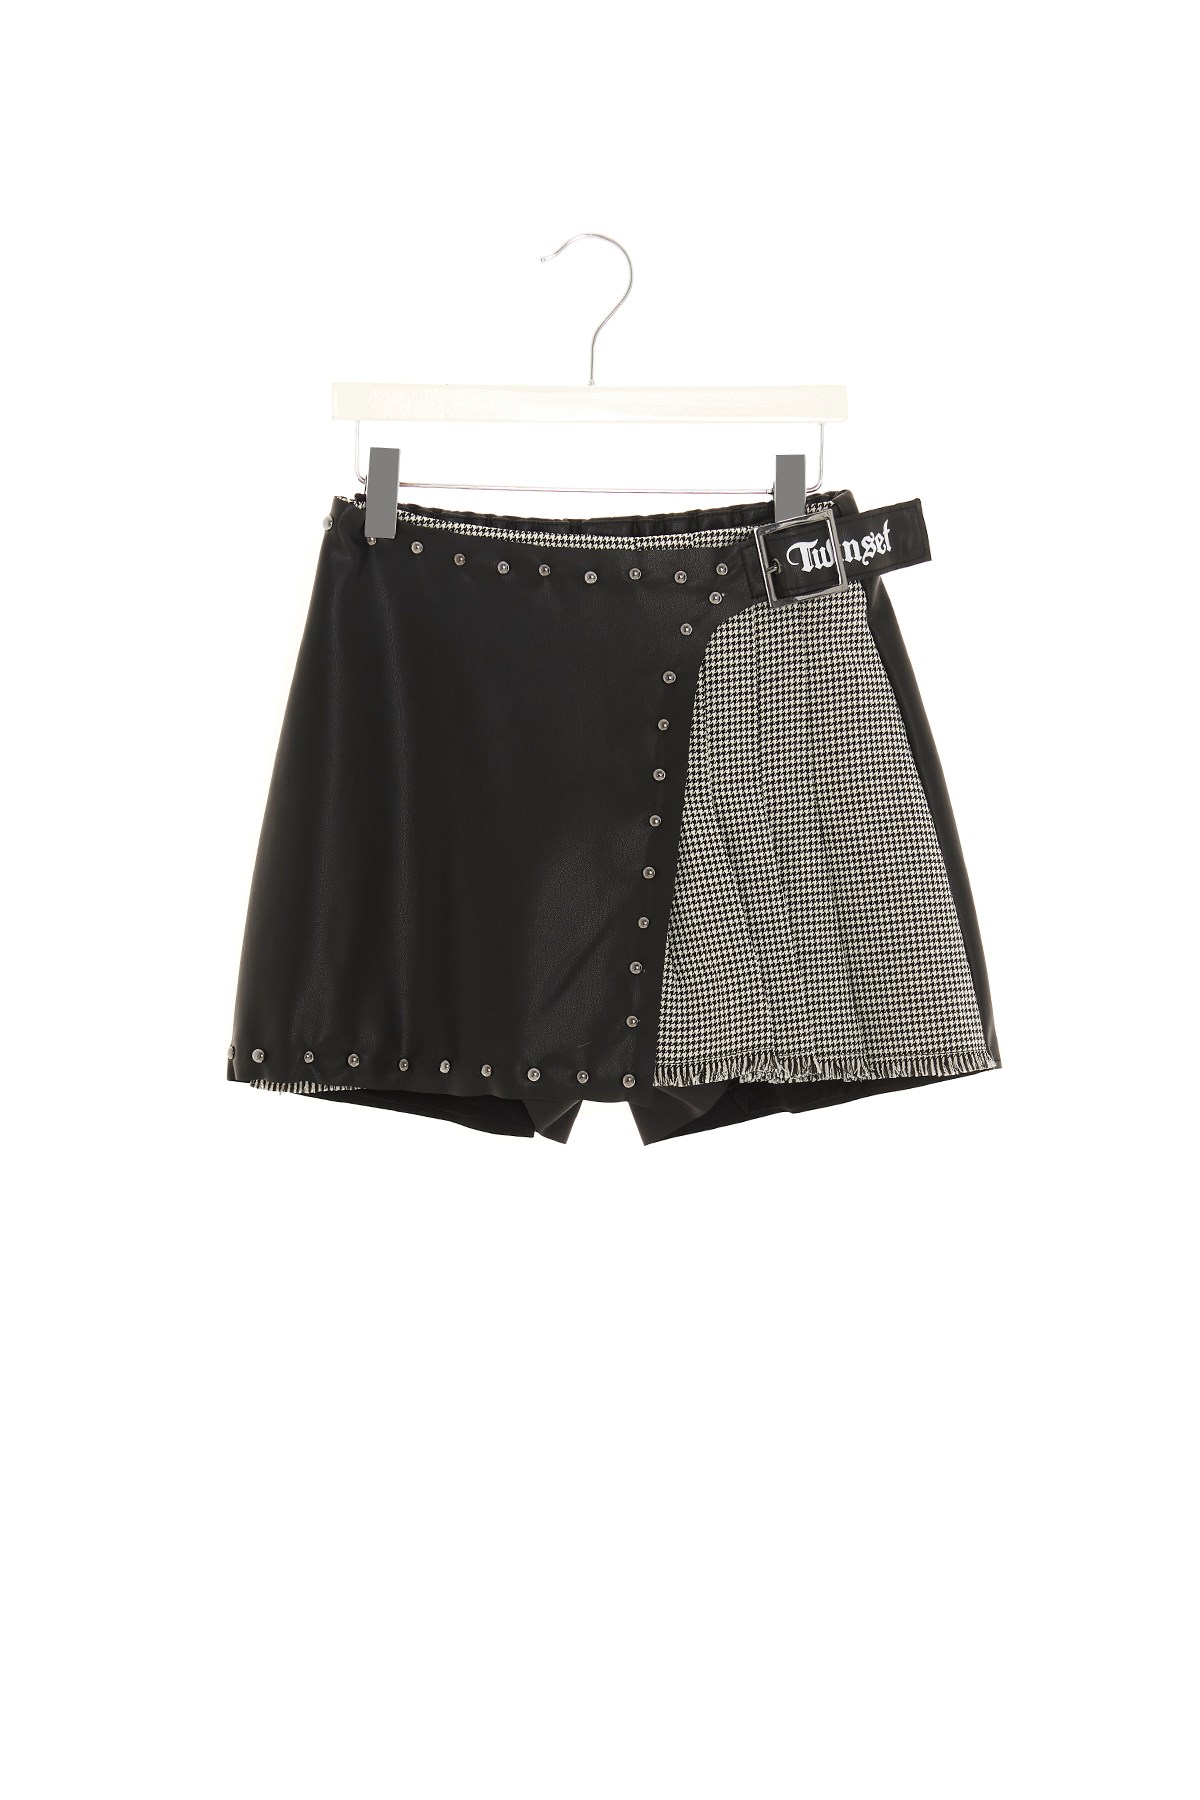 TWIN SET Eco Leather Skirt Style Shorts